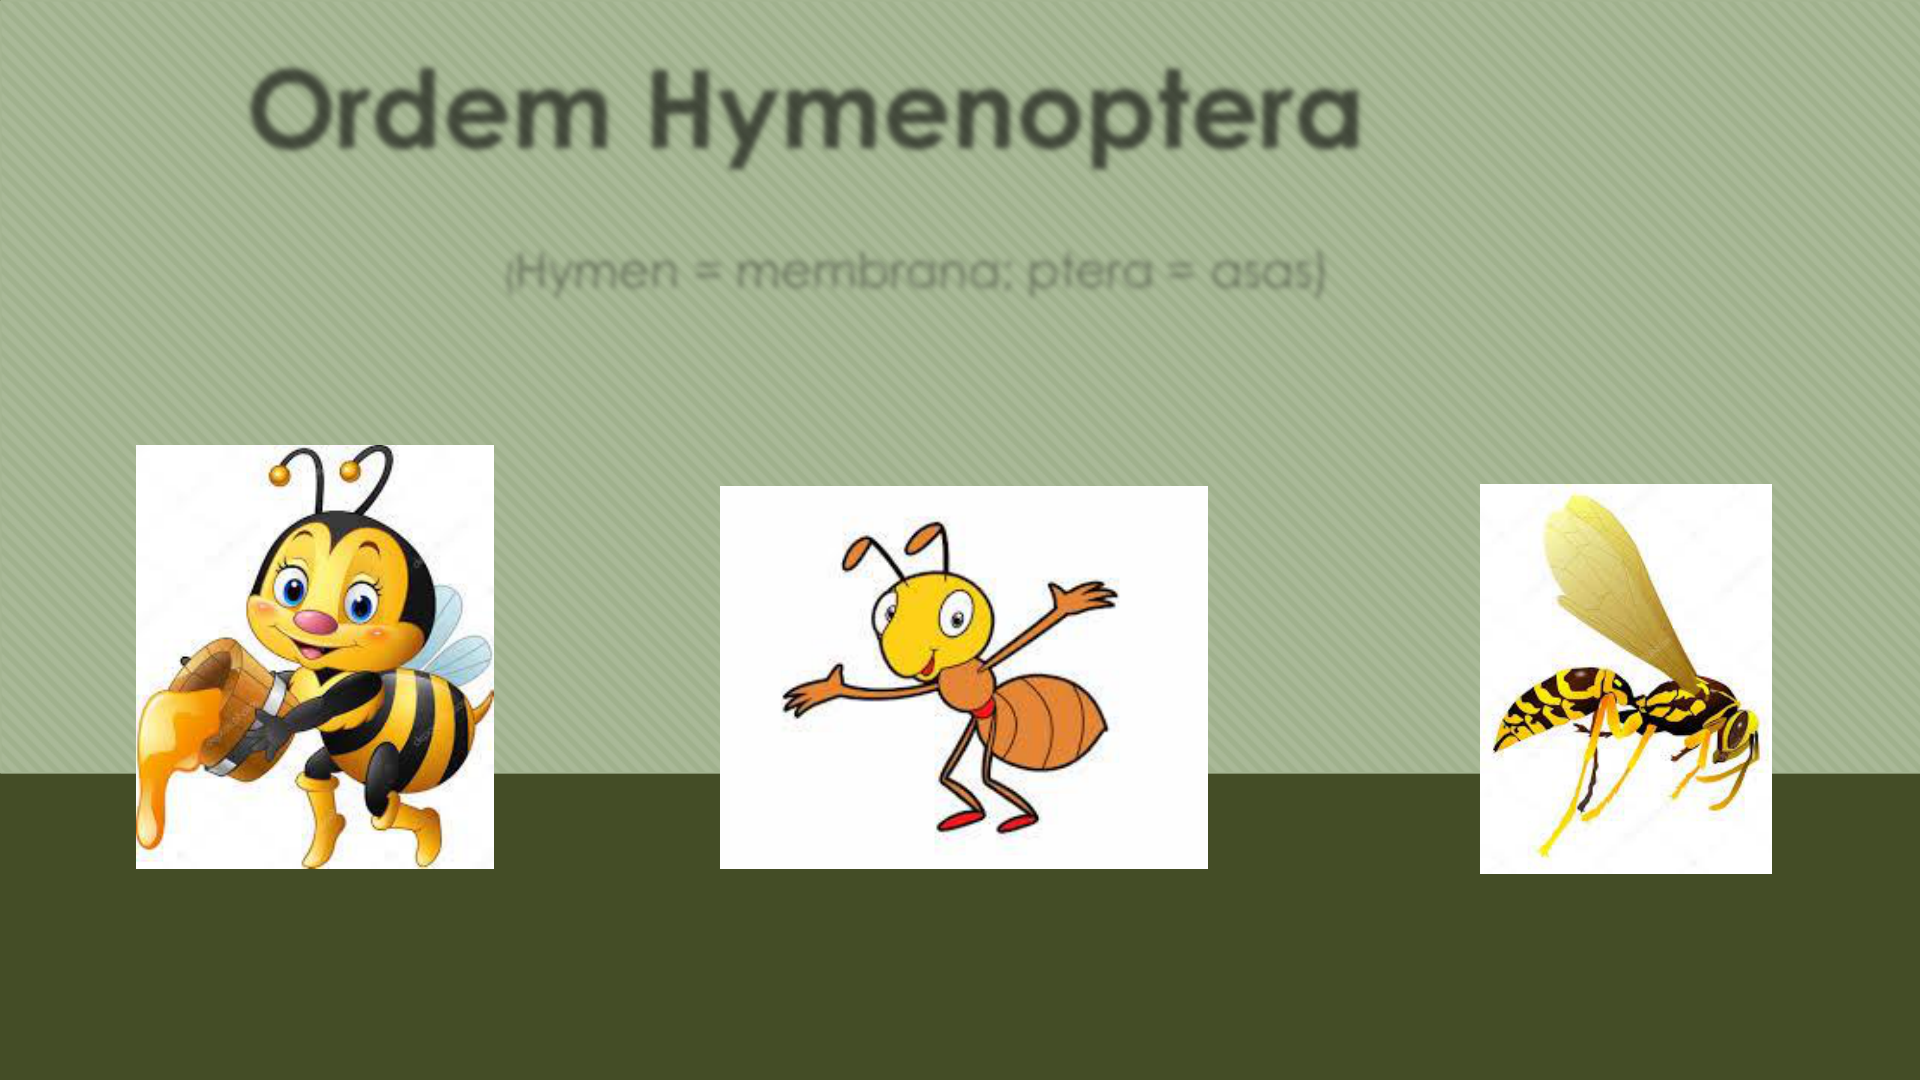 Biologia dos Insetos: Hymenoptera